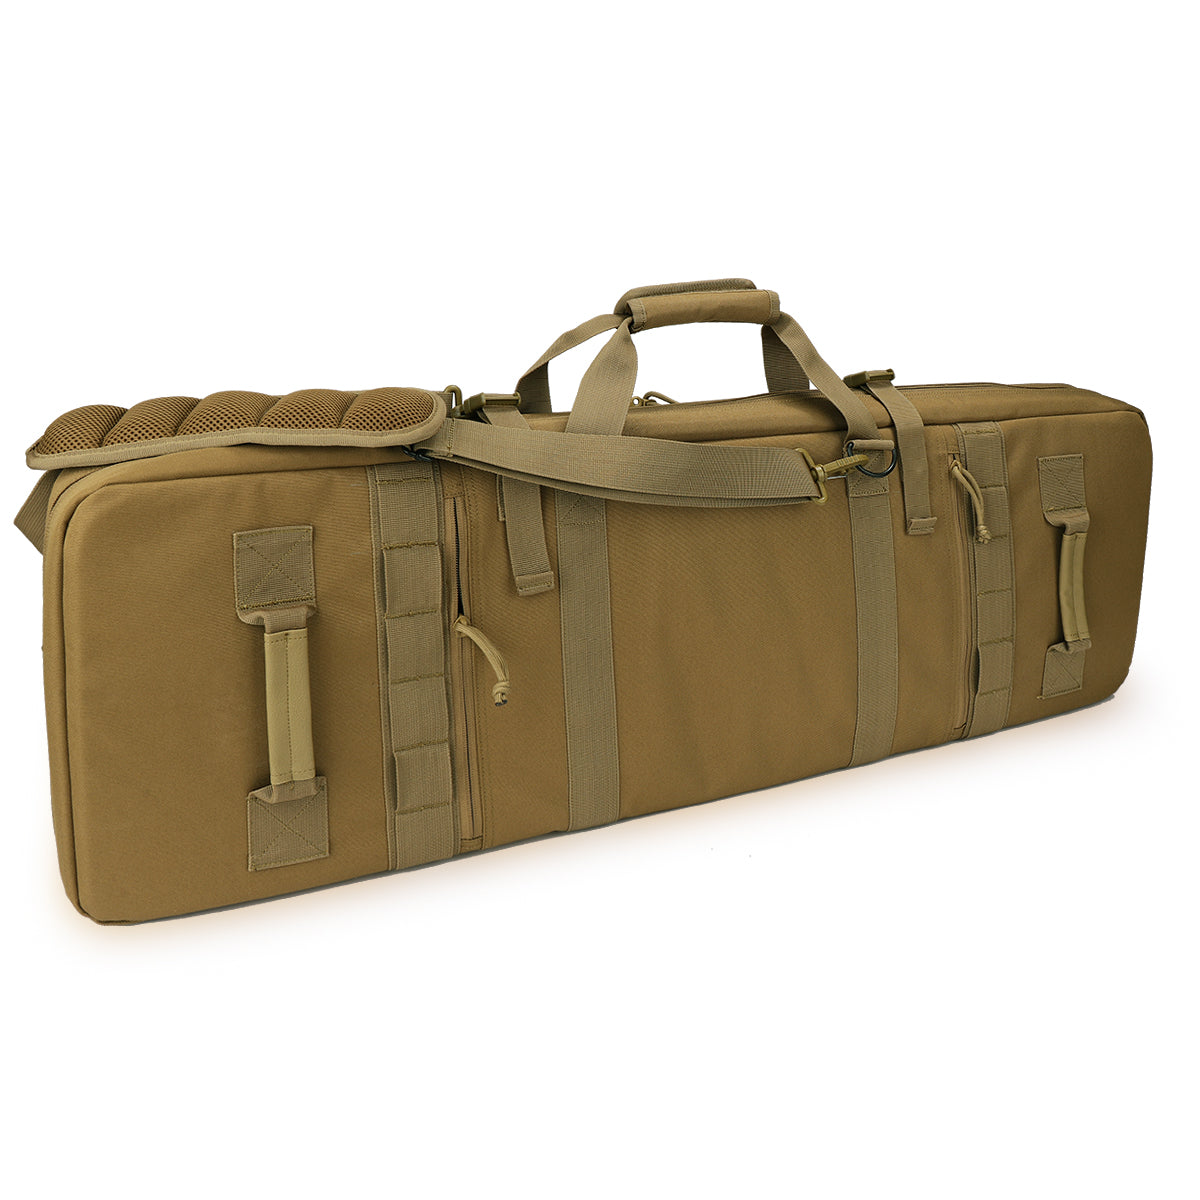 VOTAGOO Double Rifle Case Gun Bag, All-Weather Soft Heavy Duty